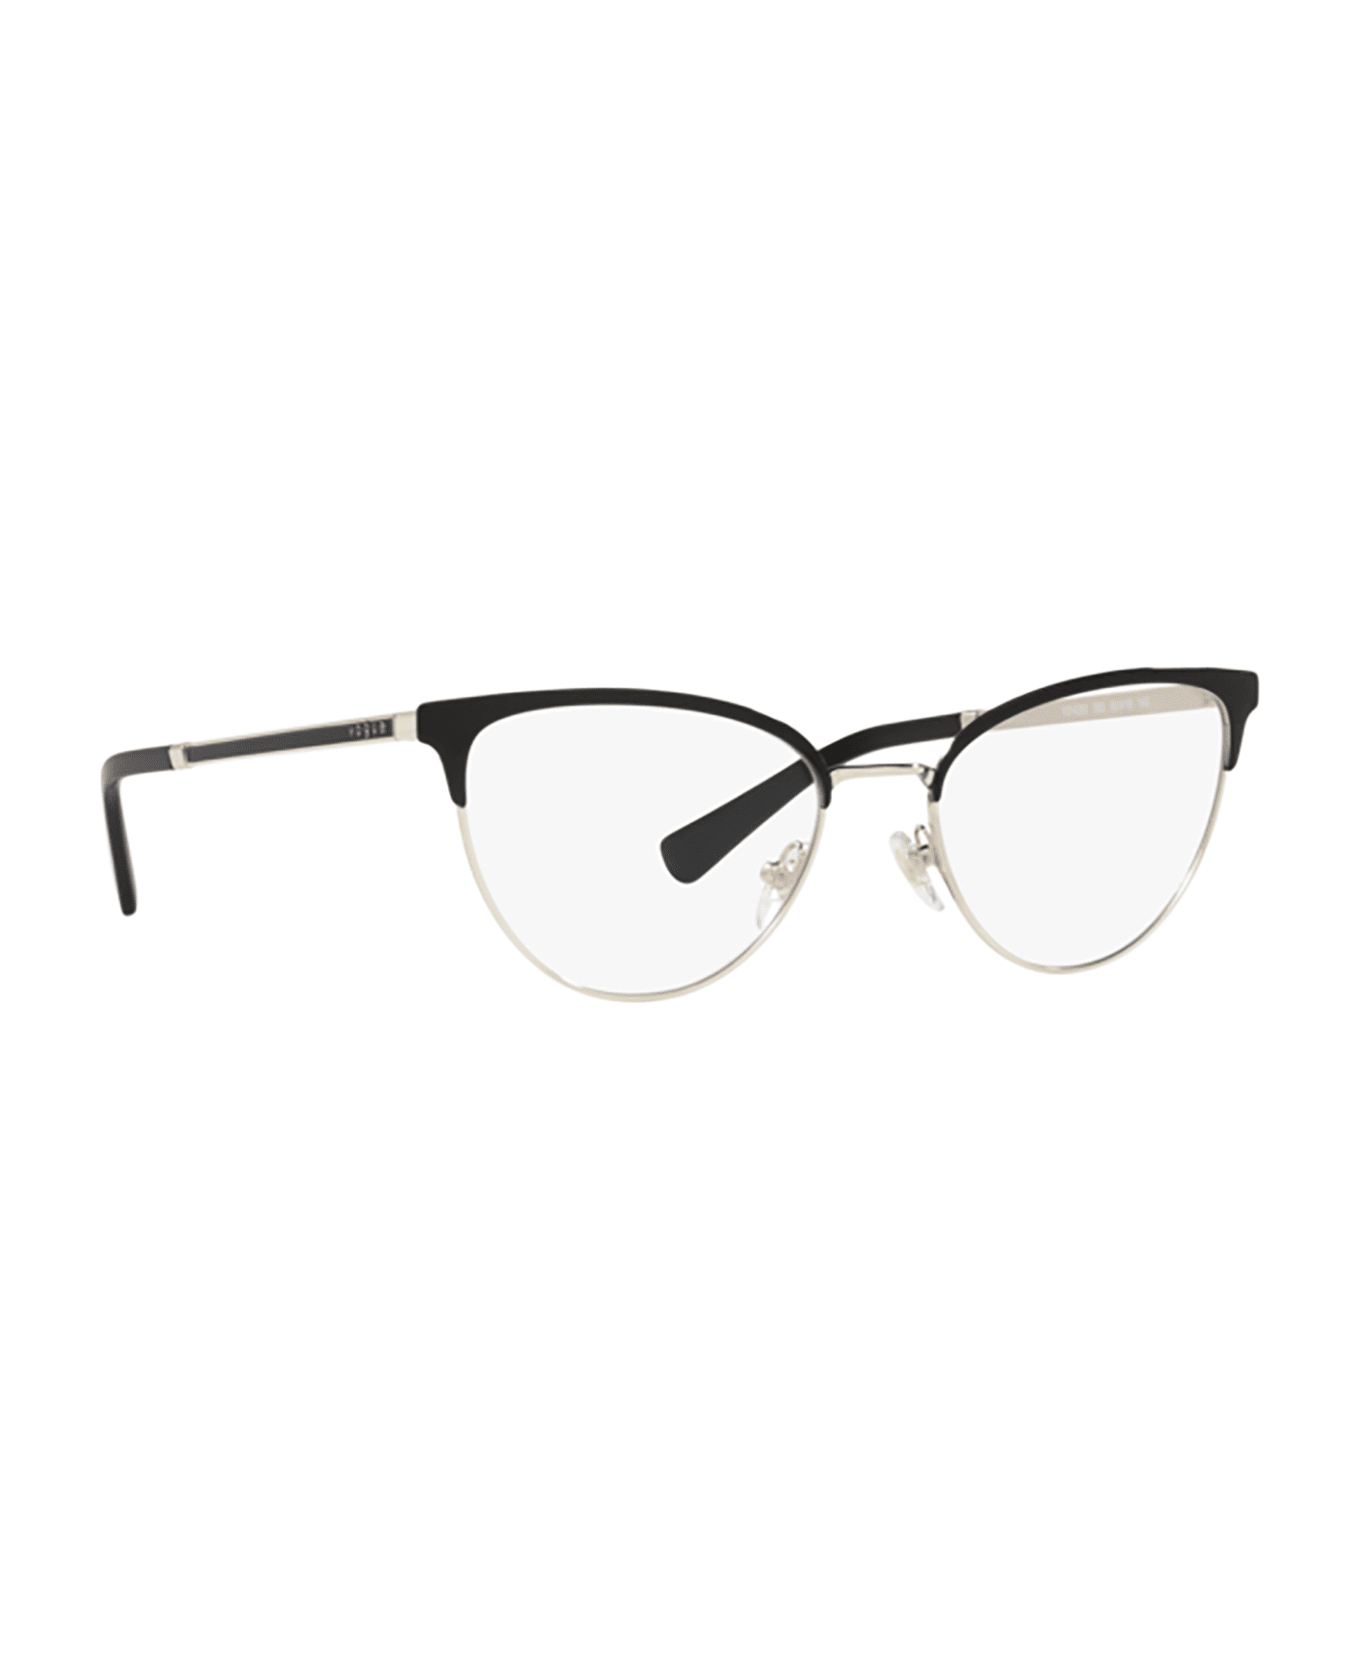 Vogue Eyewear Vo4250 Top Black/pale Gold Glasses - Top black/pale gold